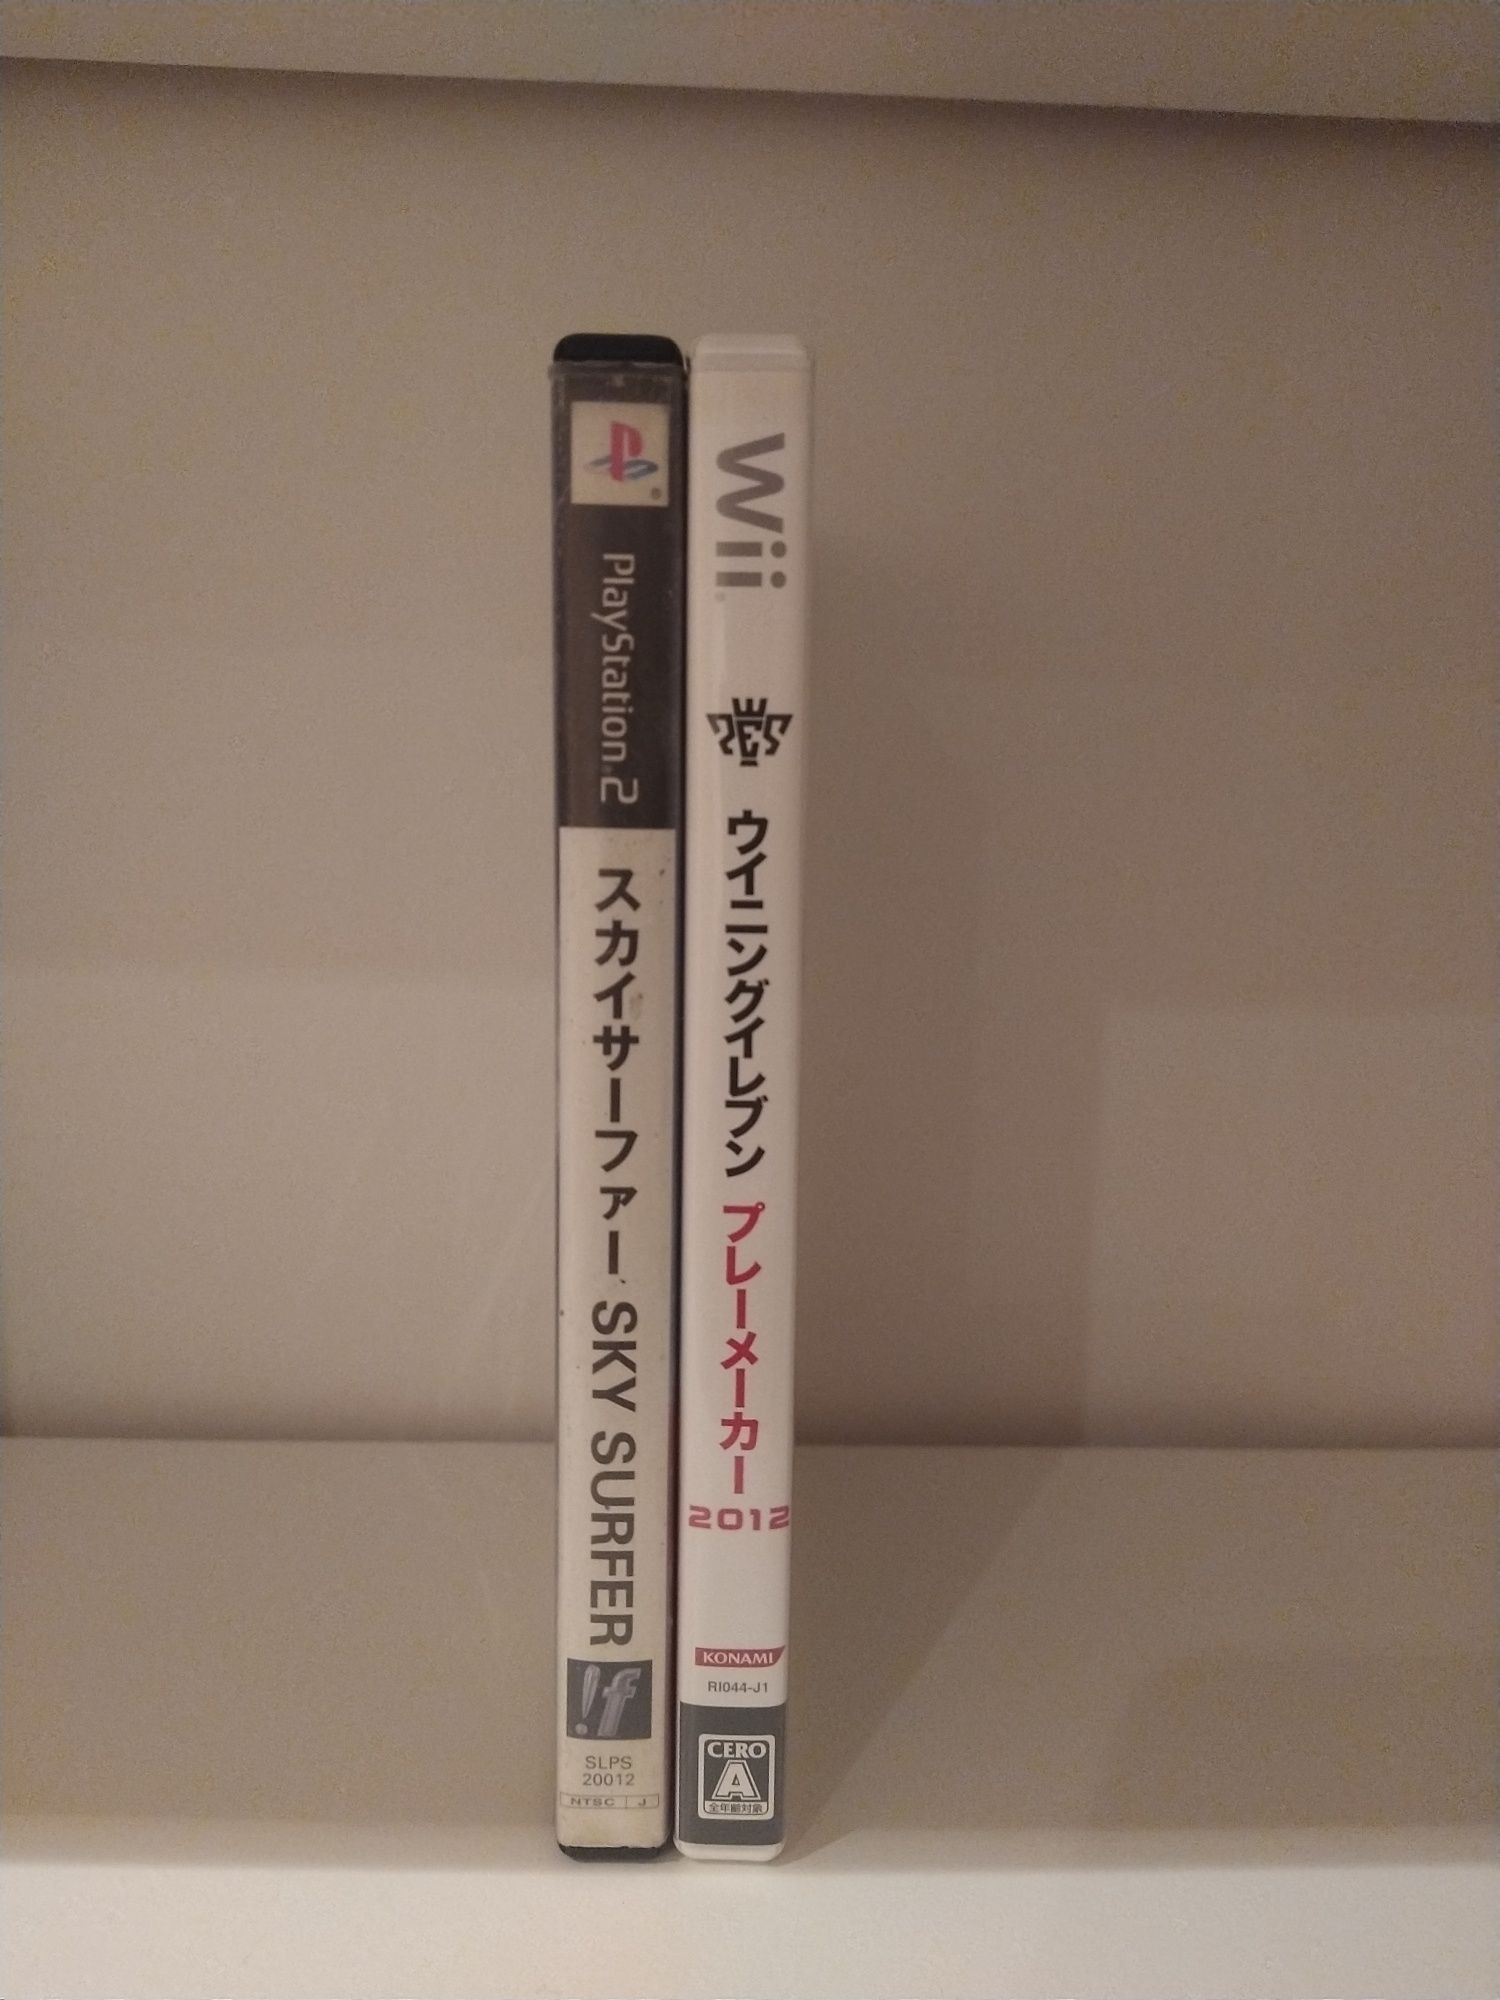 Conjunto de jogos PS2 e Wii japoneses